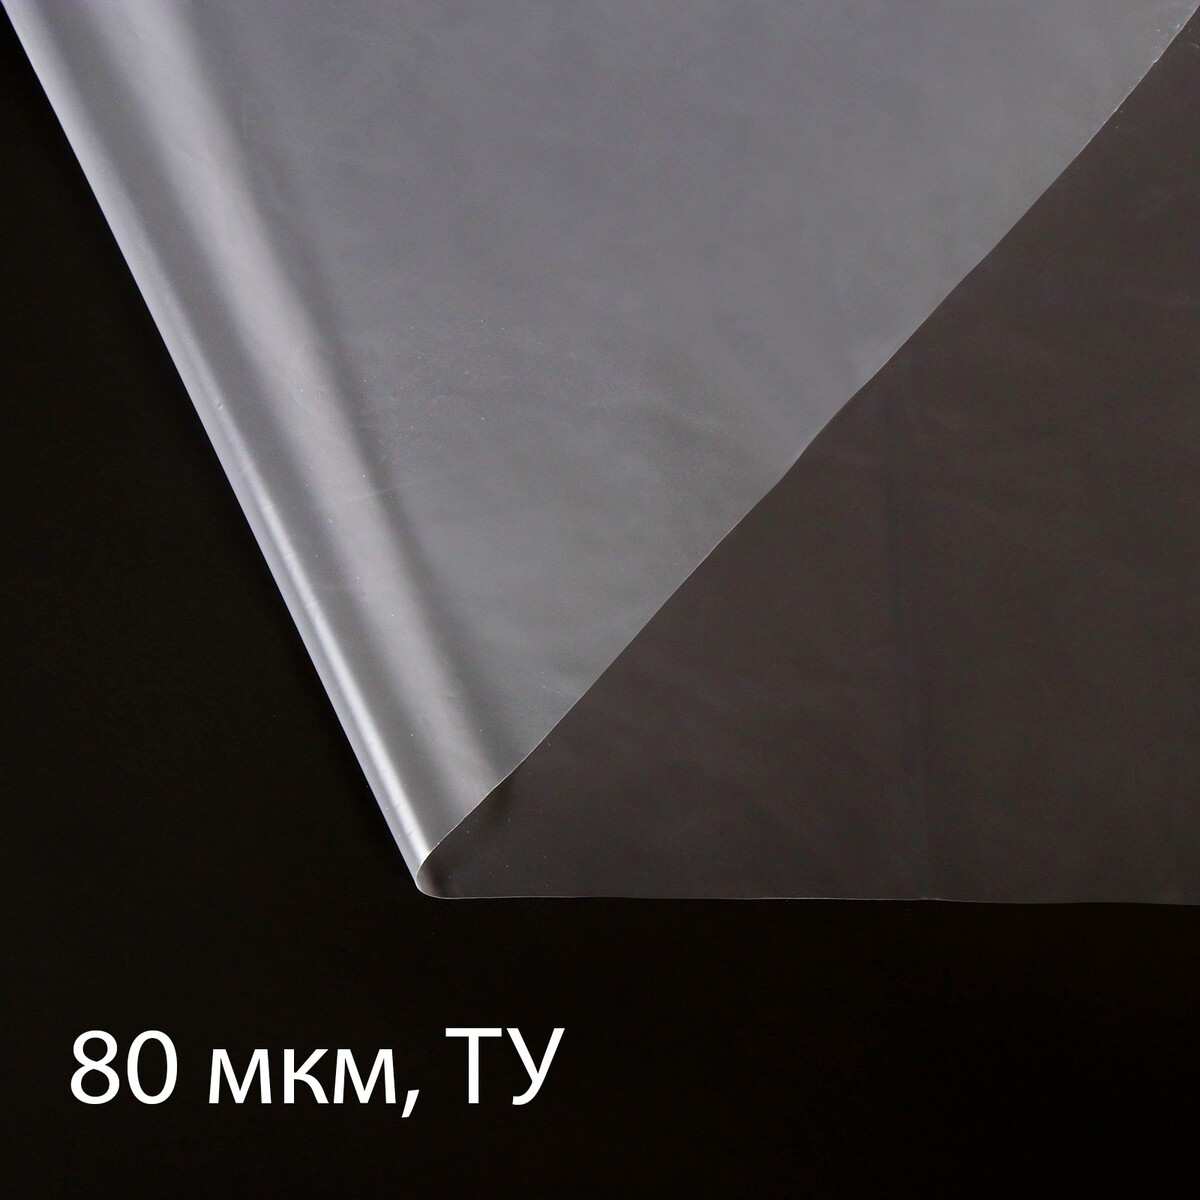 Пленка полиэтиленовая 80 мкм, прозрачная, длина 5 м, ширина 3 м, рукав (1.5 × 2 м), эконом 50% пленка полиэтиленовая толщина 150 мкм прозрачная 5 × 3 м рукав 1 5 м × 2 эконом 50%